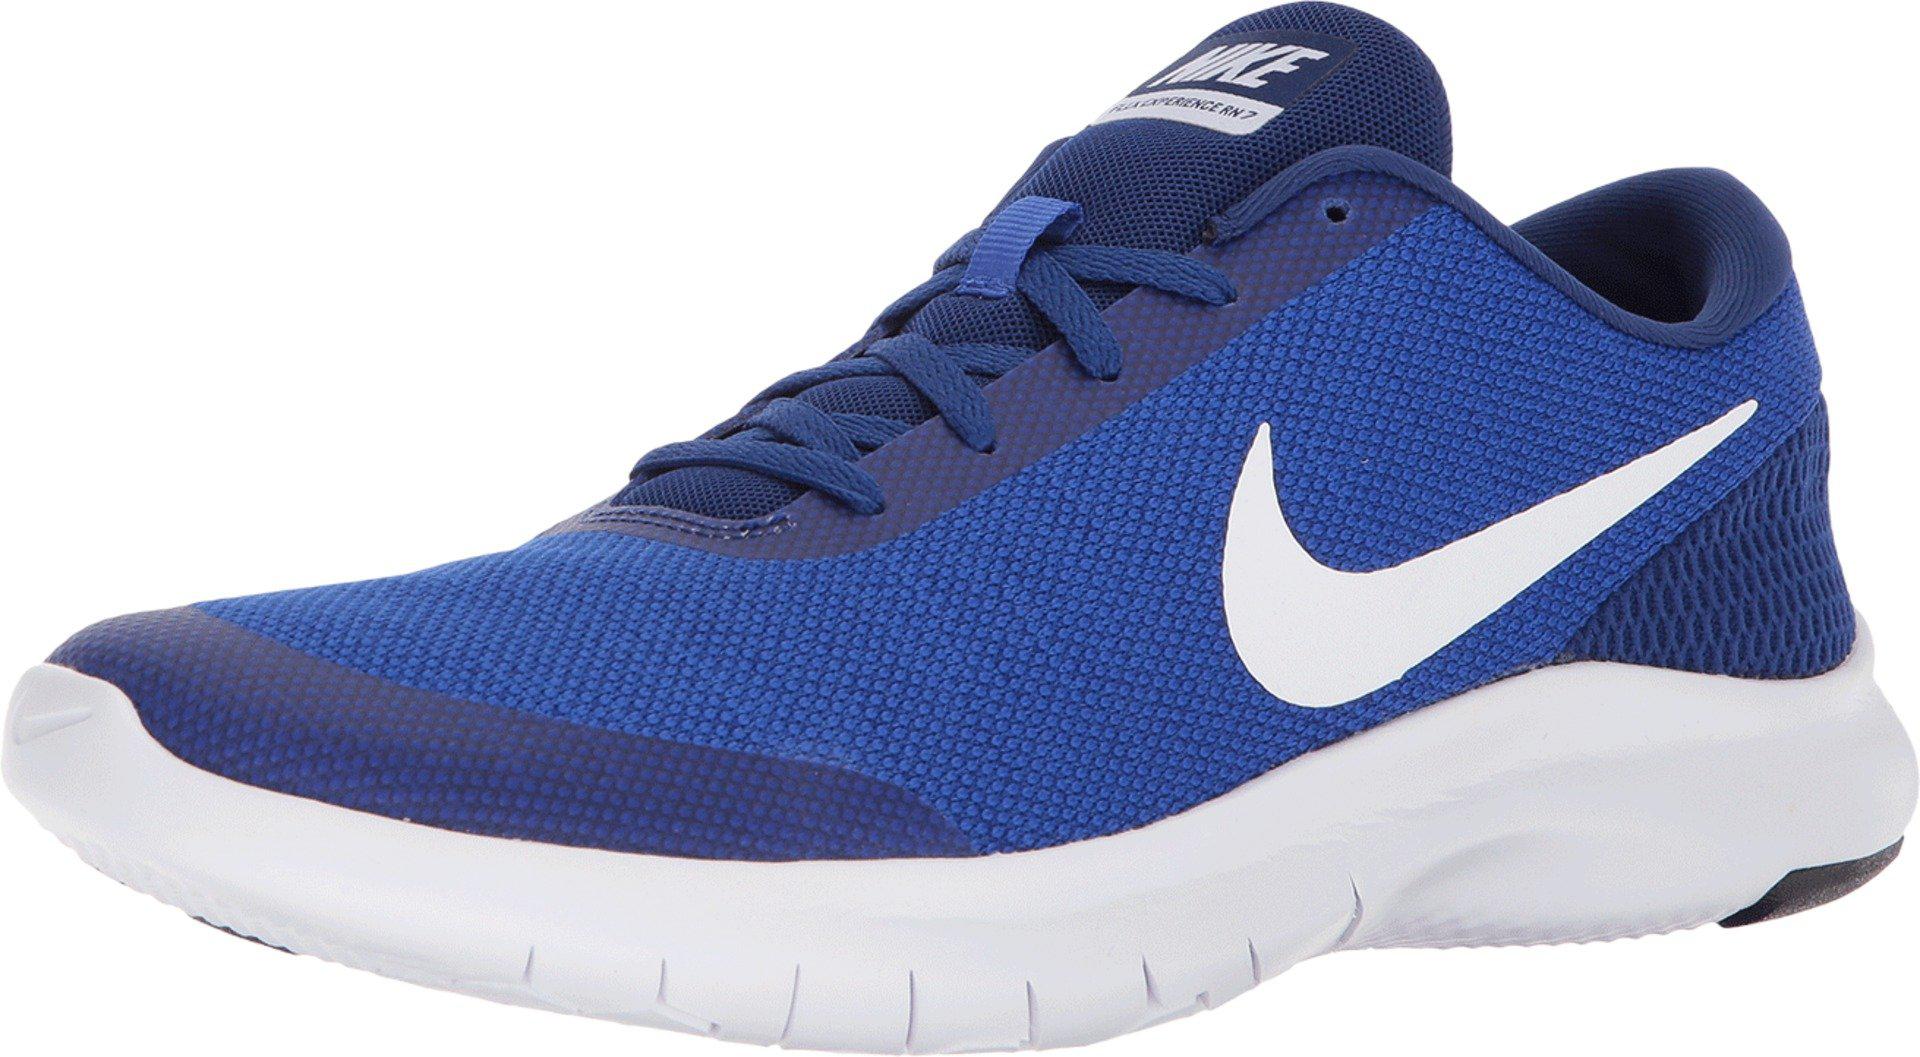 Lyst - Nike Flex Experience Rn 7 in Blue for Men